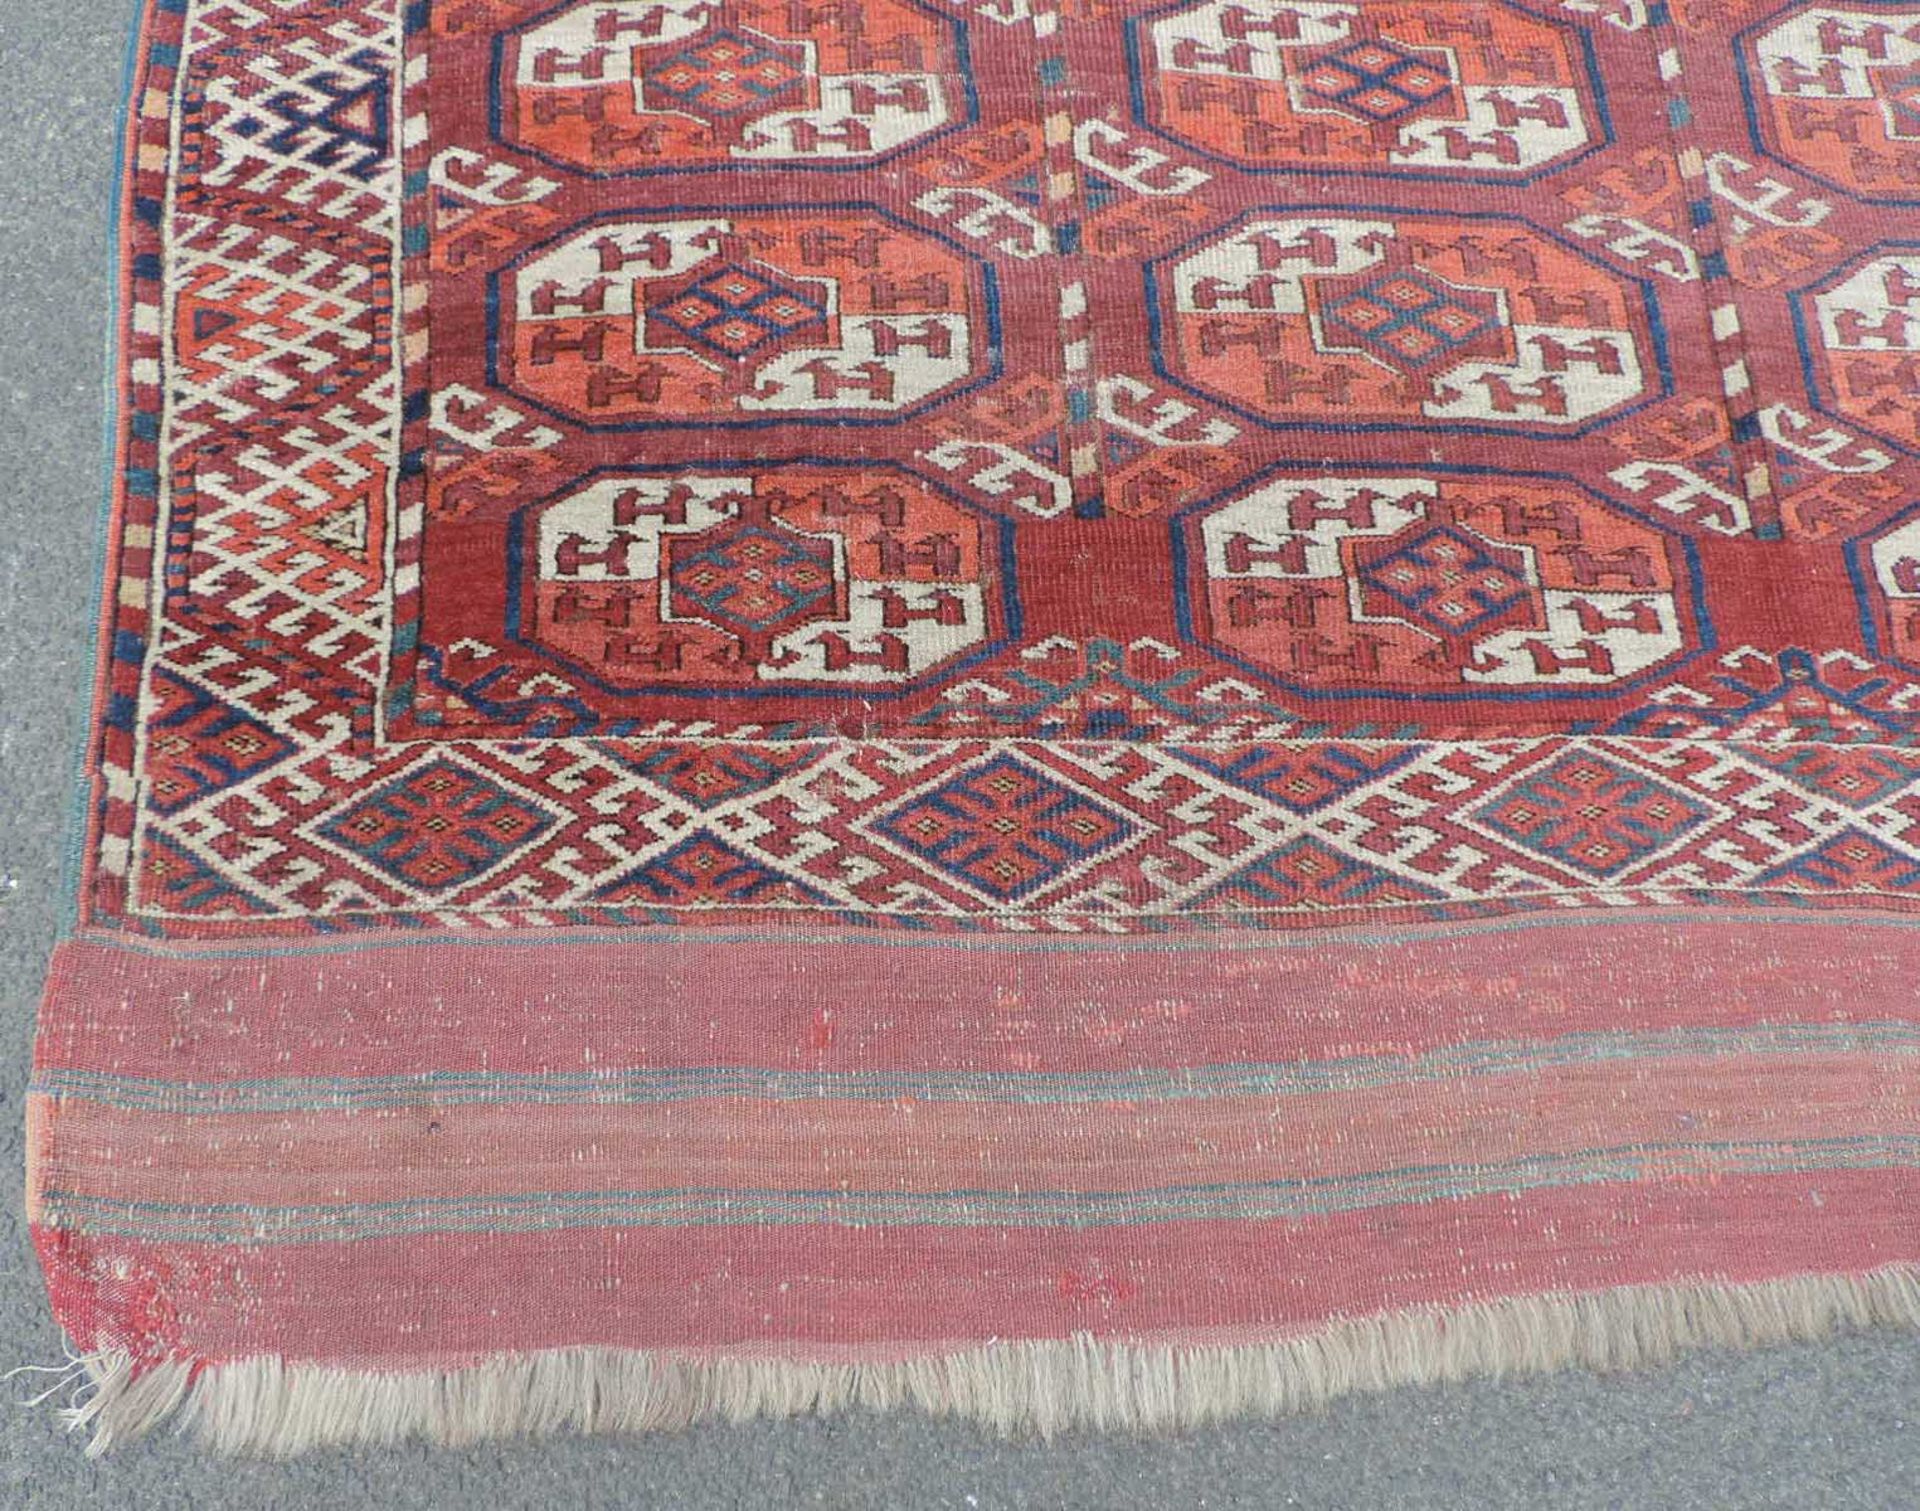 Kizil Ayak Hauptteppich. Turkmenistan, antik, um 1850.427 cm x 200 cm insgesamt. Handgeknüpft, Wolle - Image 7 of 14